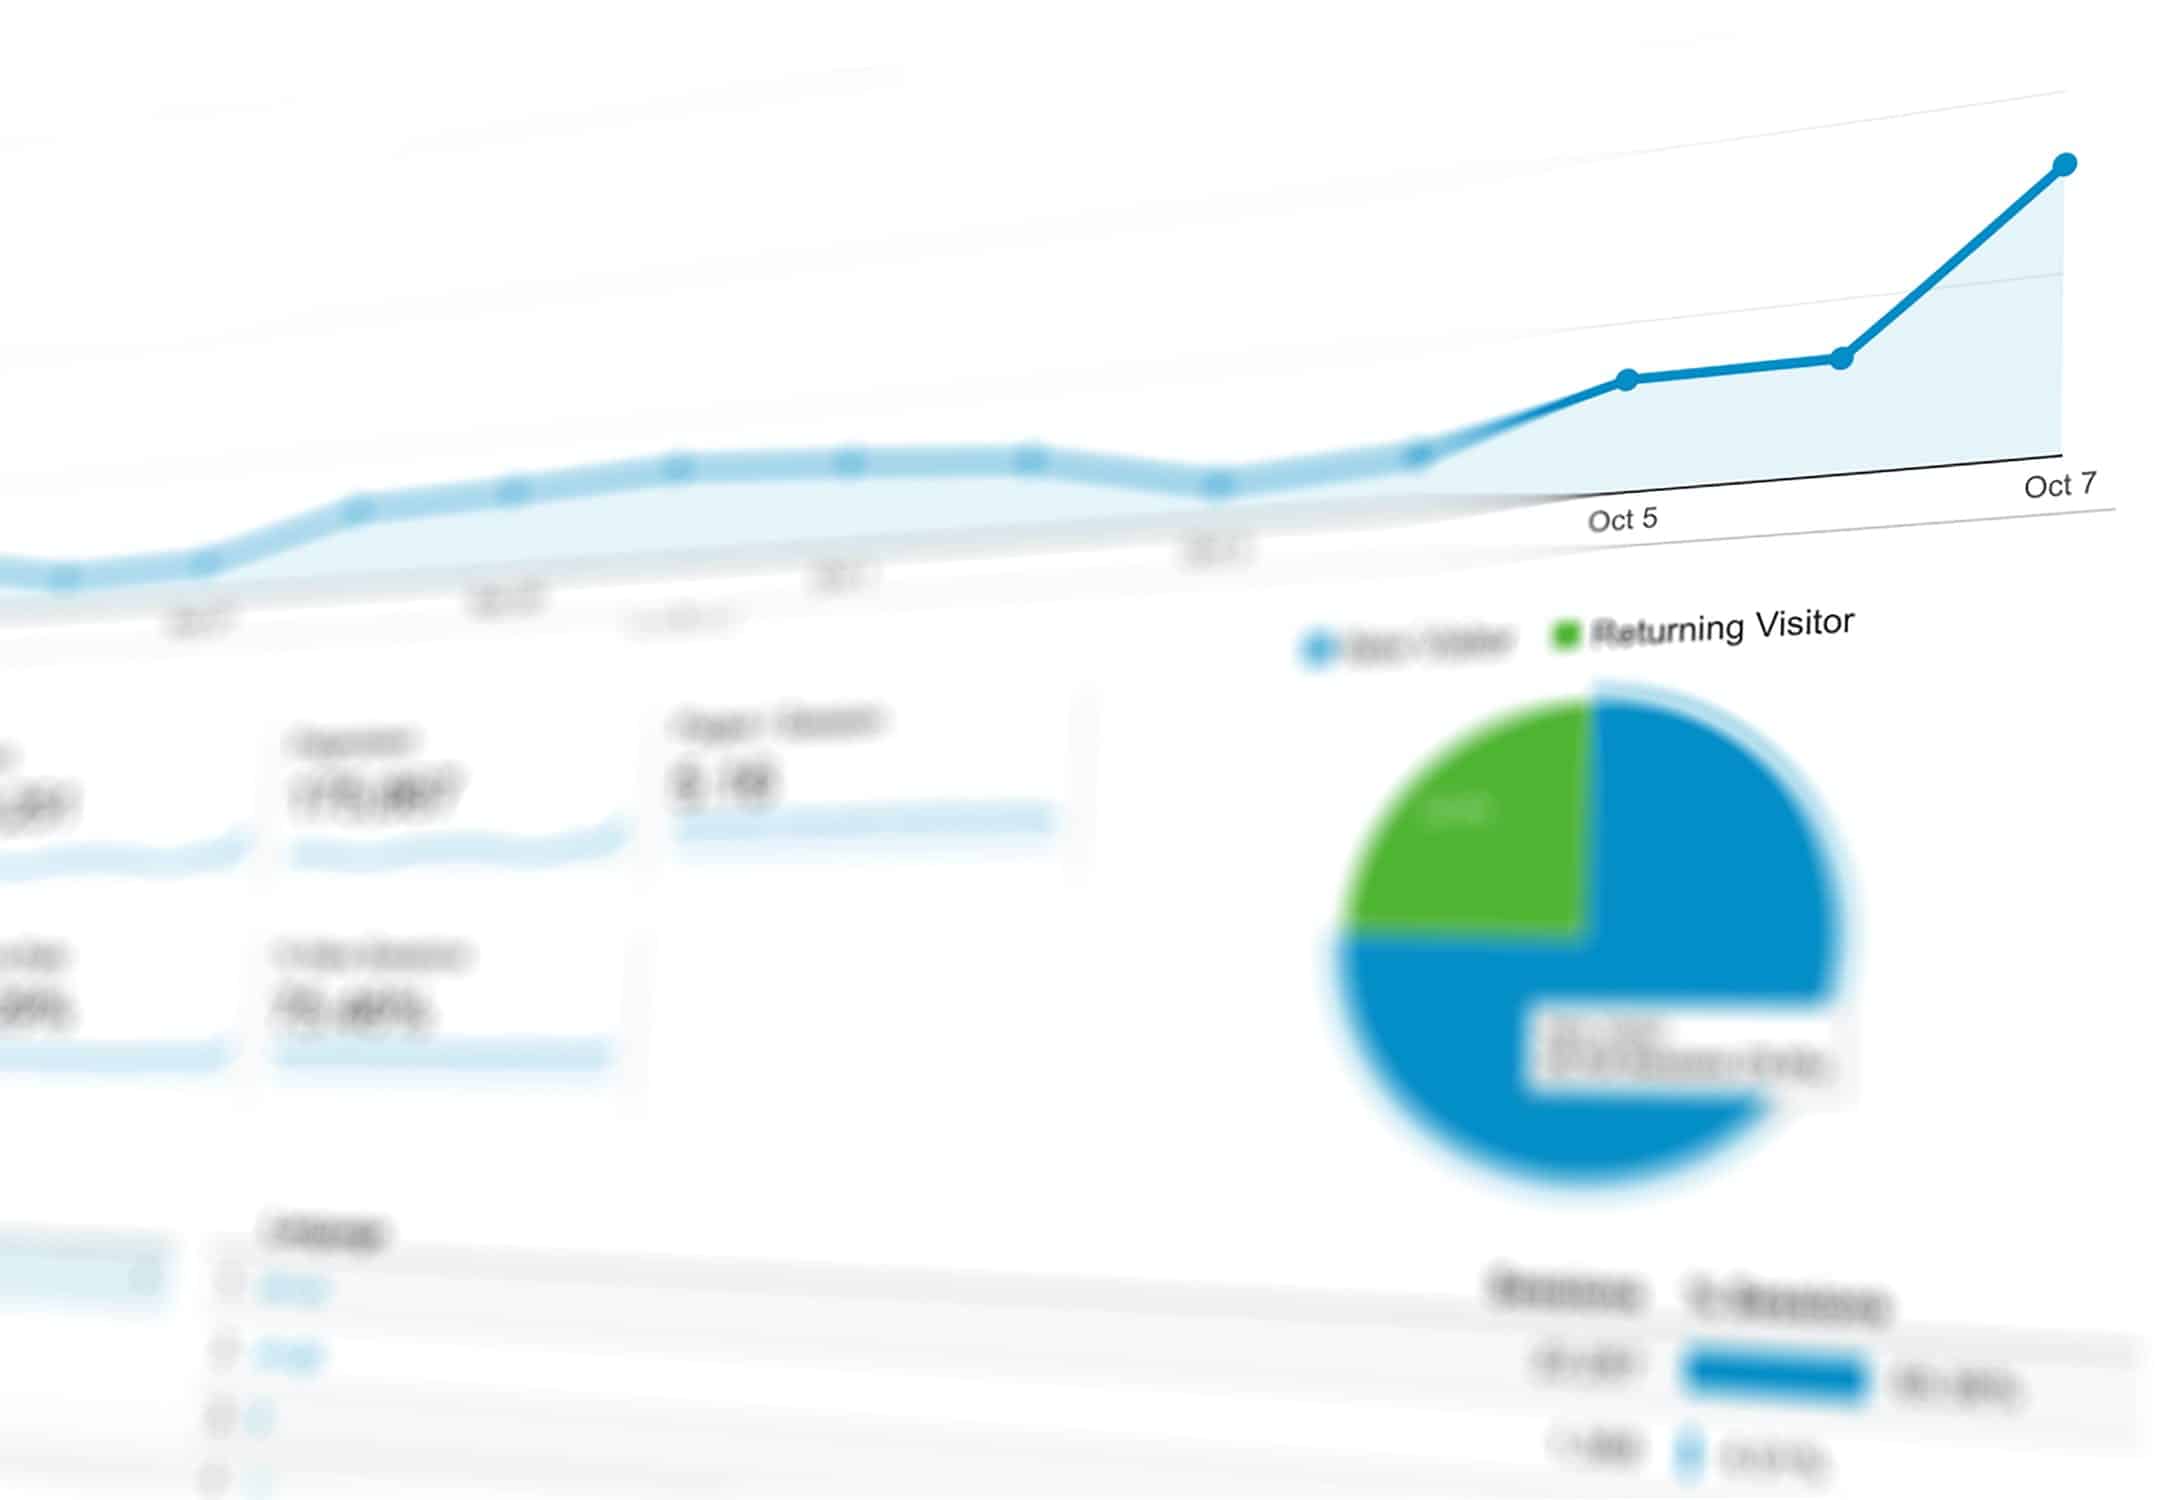 stock image showing a marketing program analytics screen